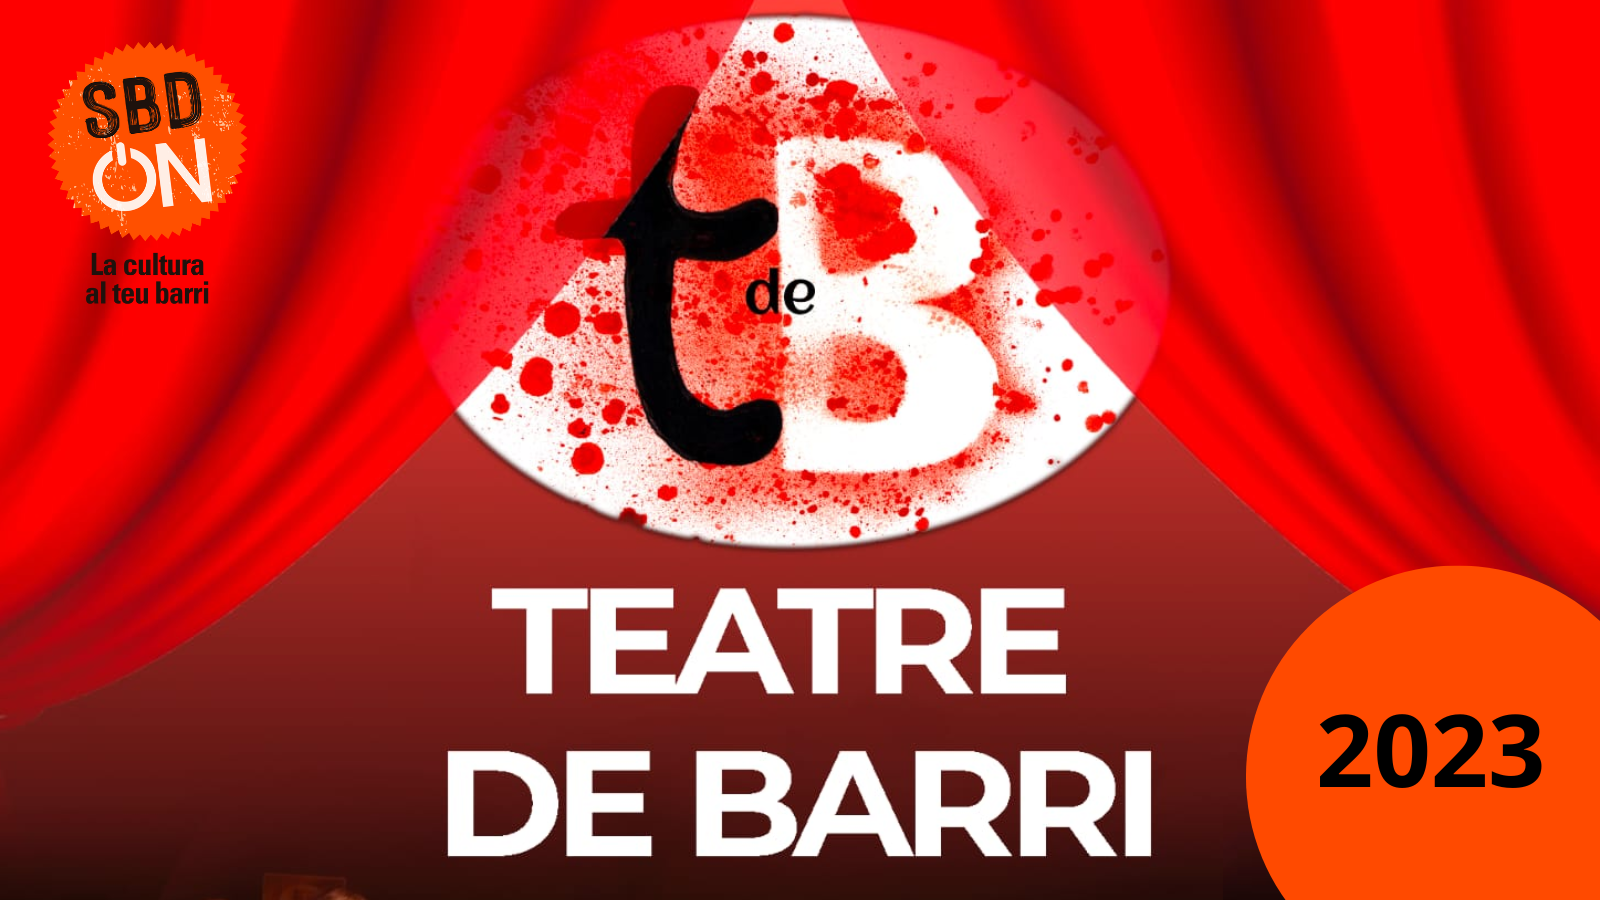 Teatre de Barri 2023